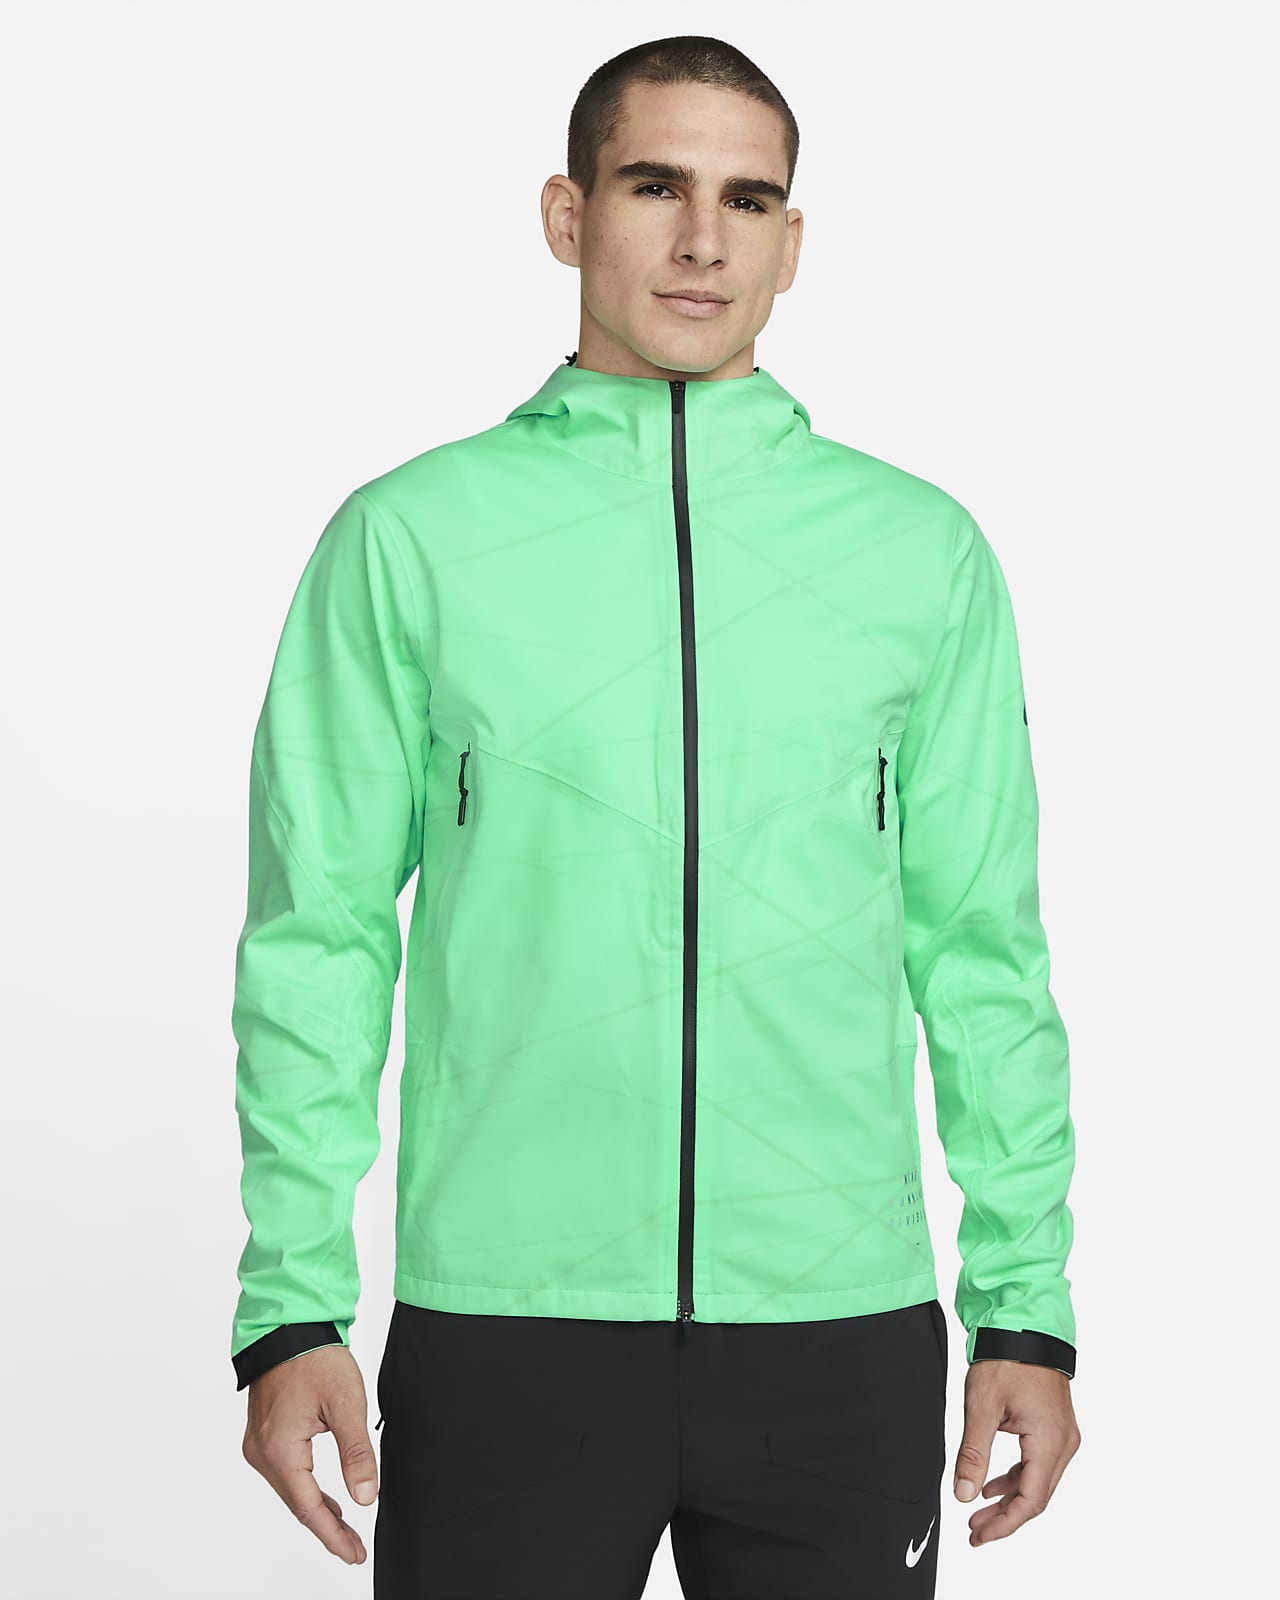 Nike Storm-FIT Run Division Men's Running Jacket